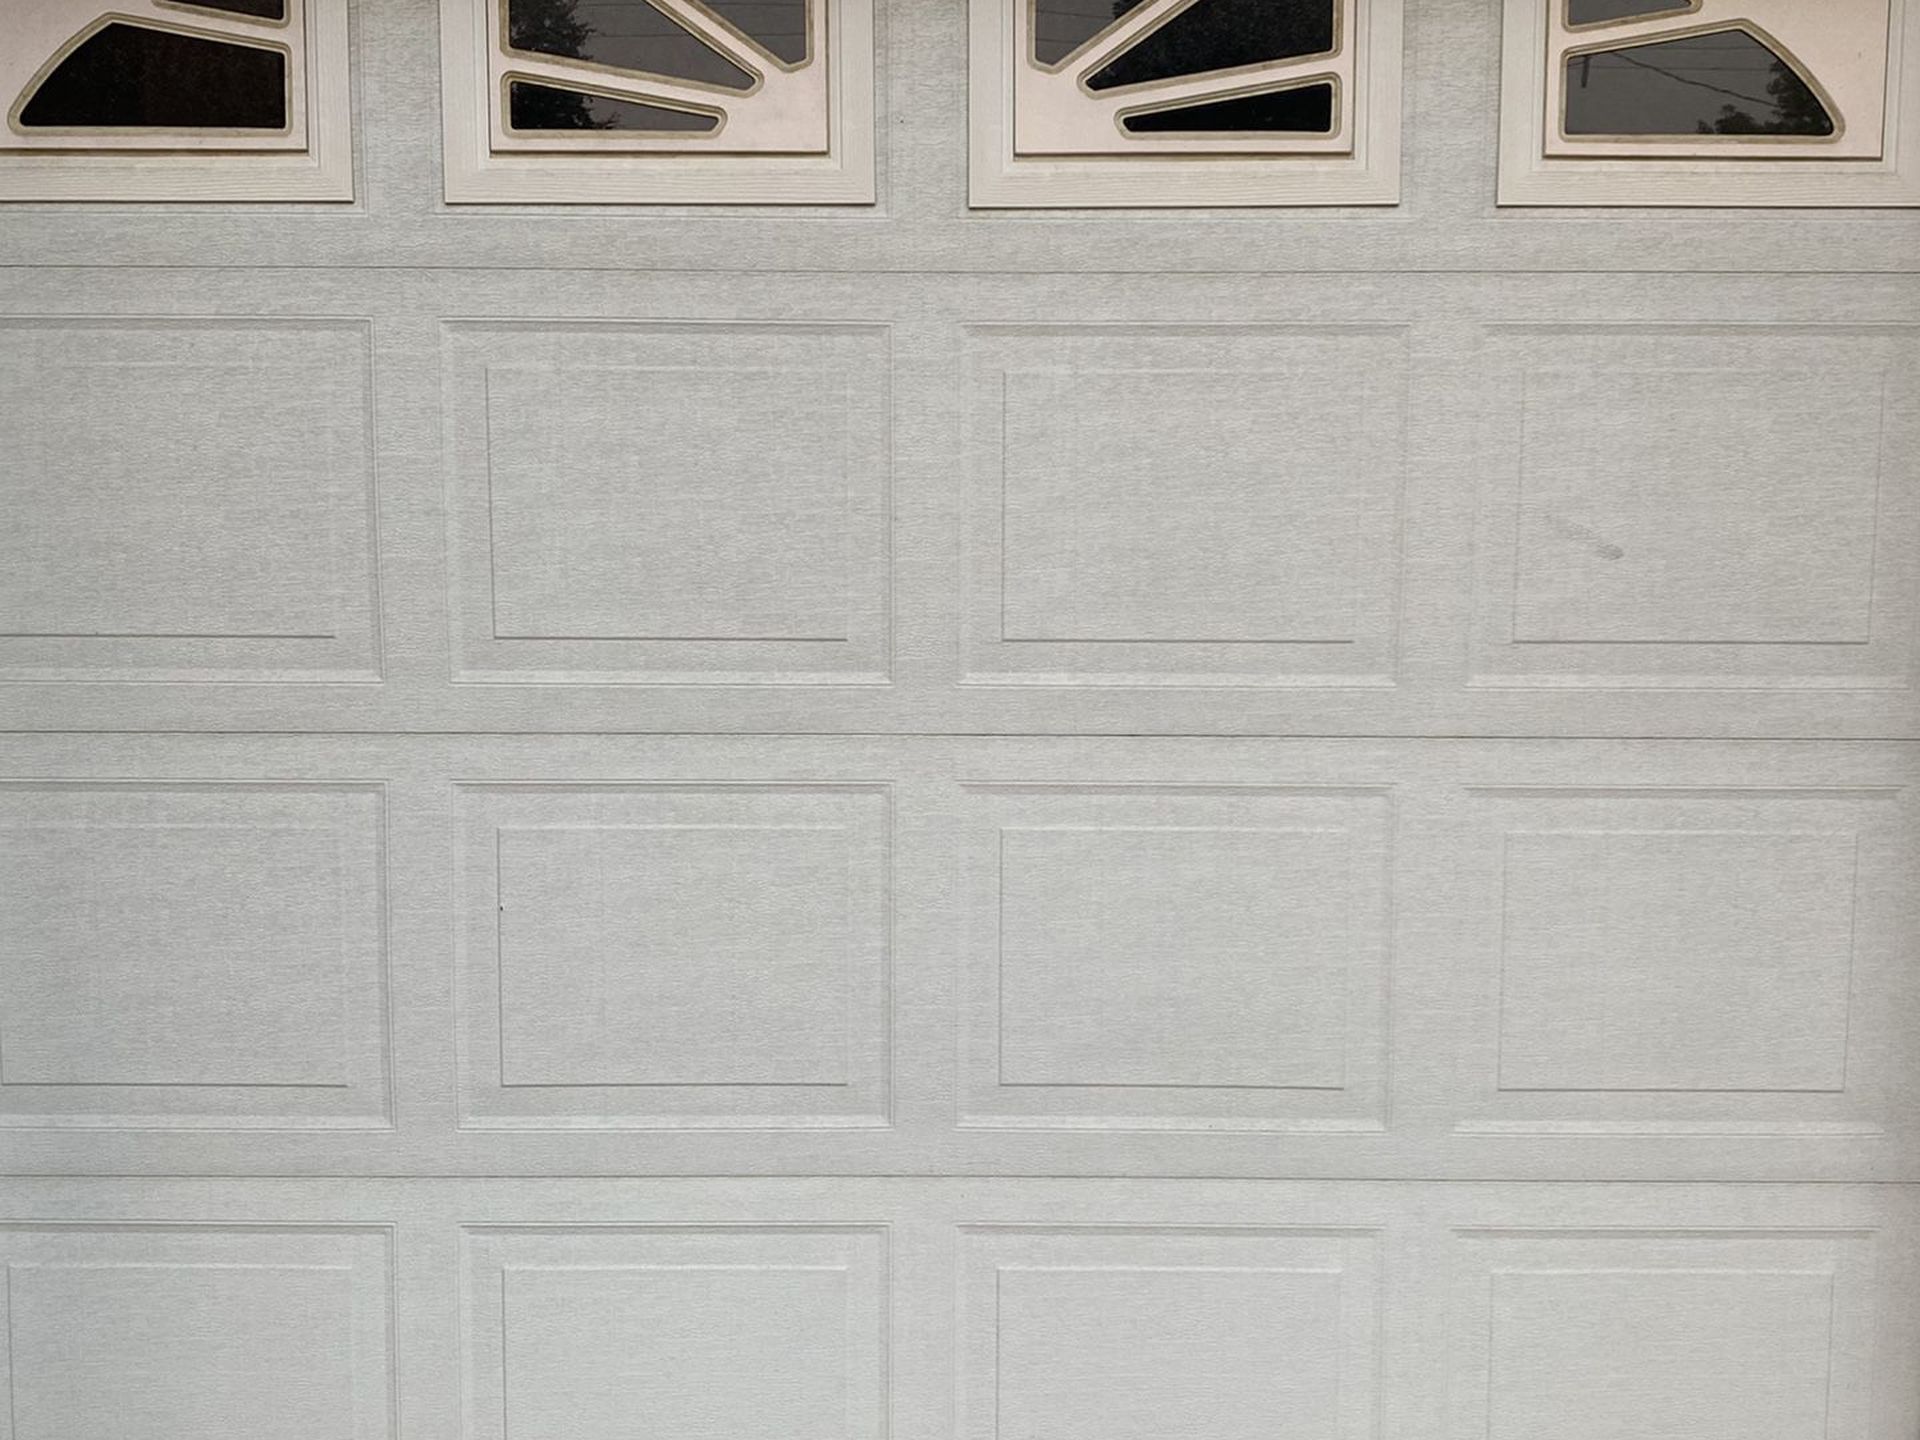 White garage door 6x7 For Single Car